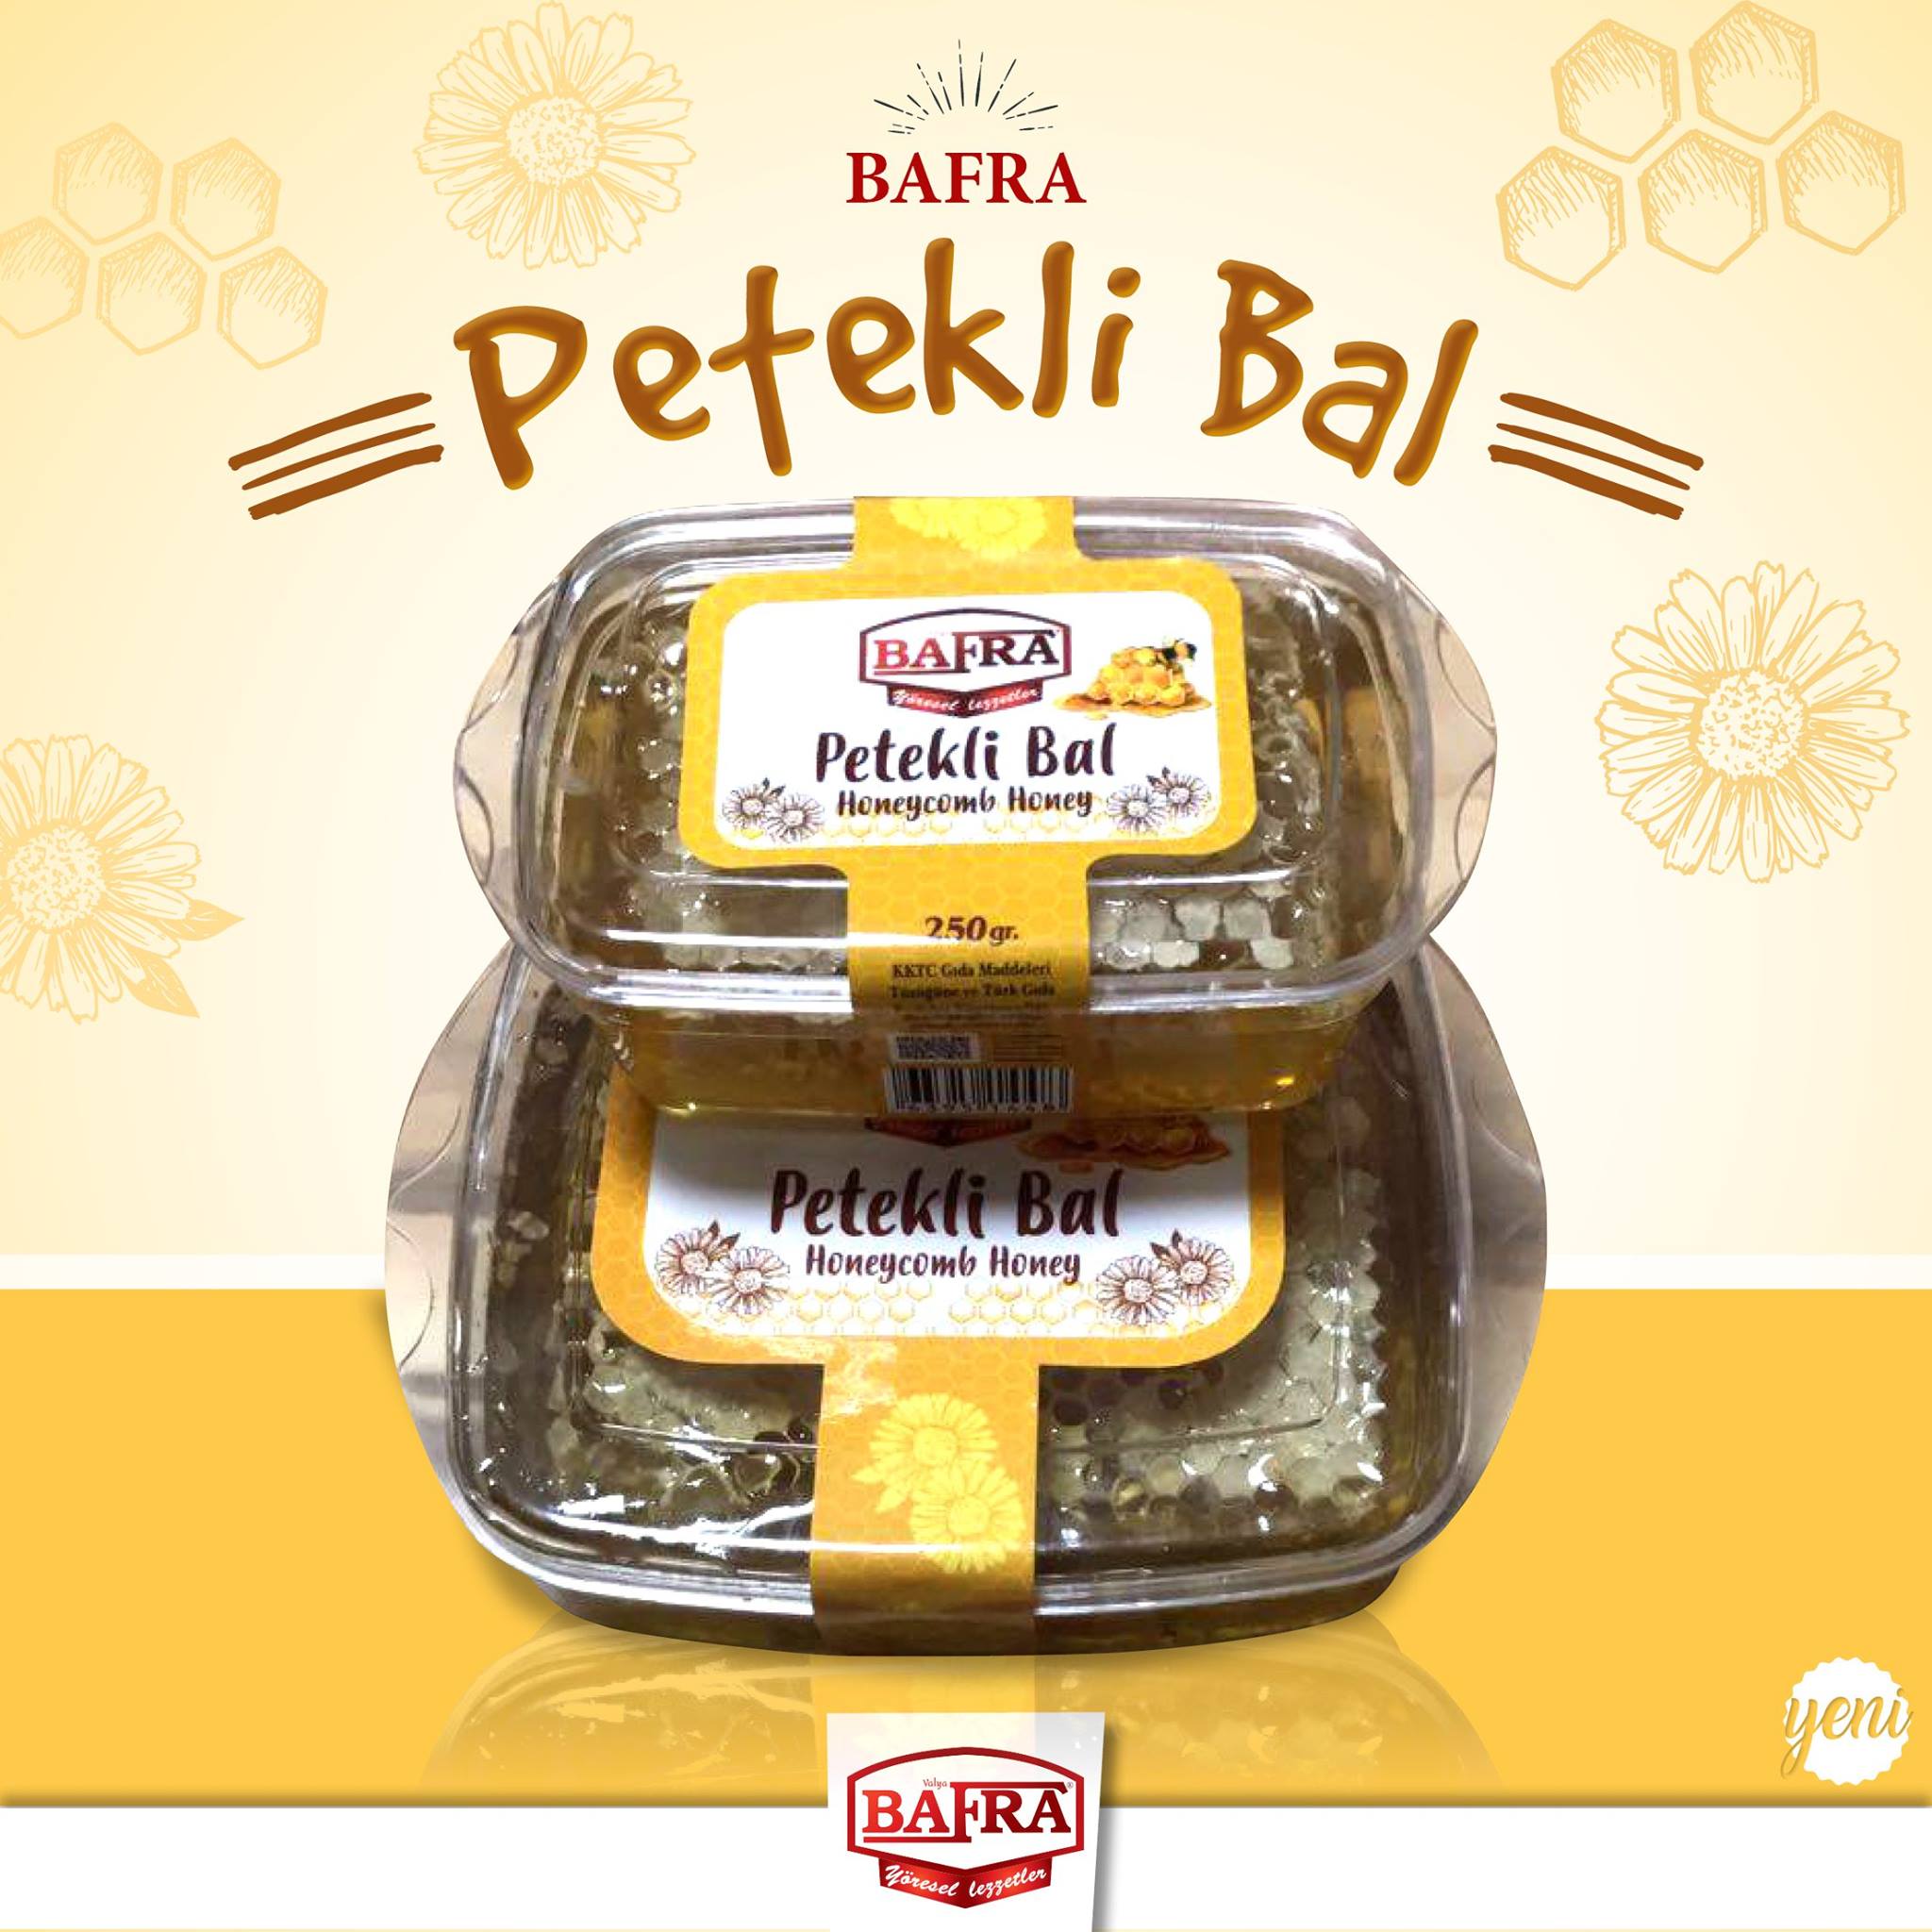 Kıbrıs Petek Bal, Bafra Petek Bal, Comb Honey